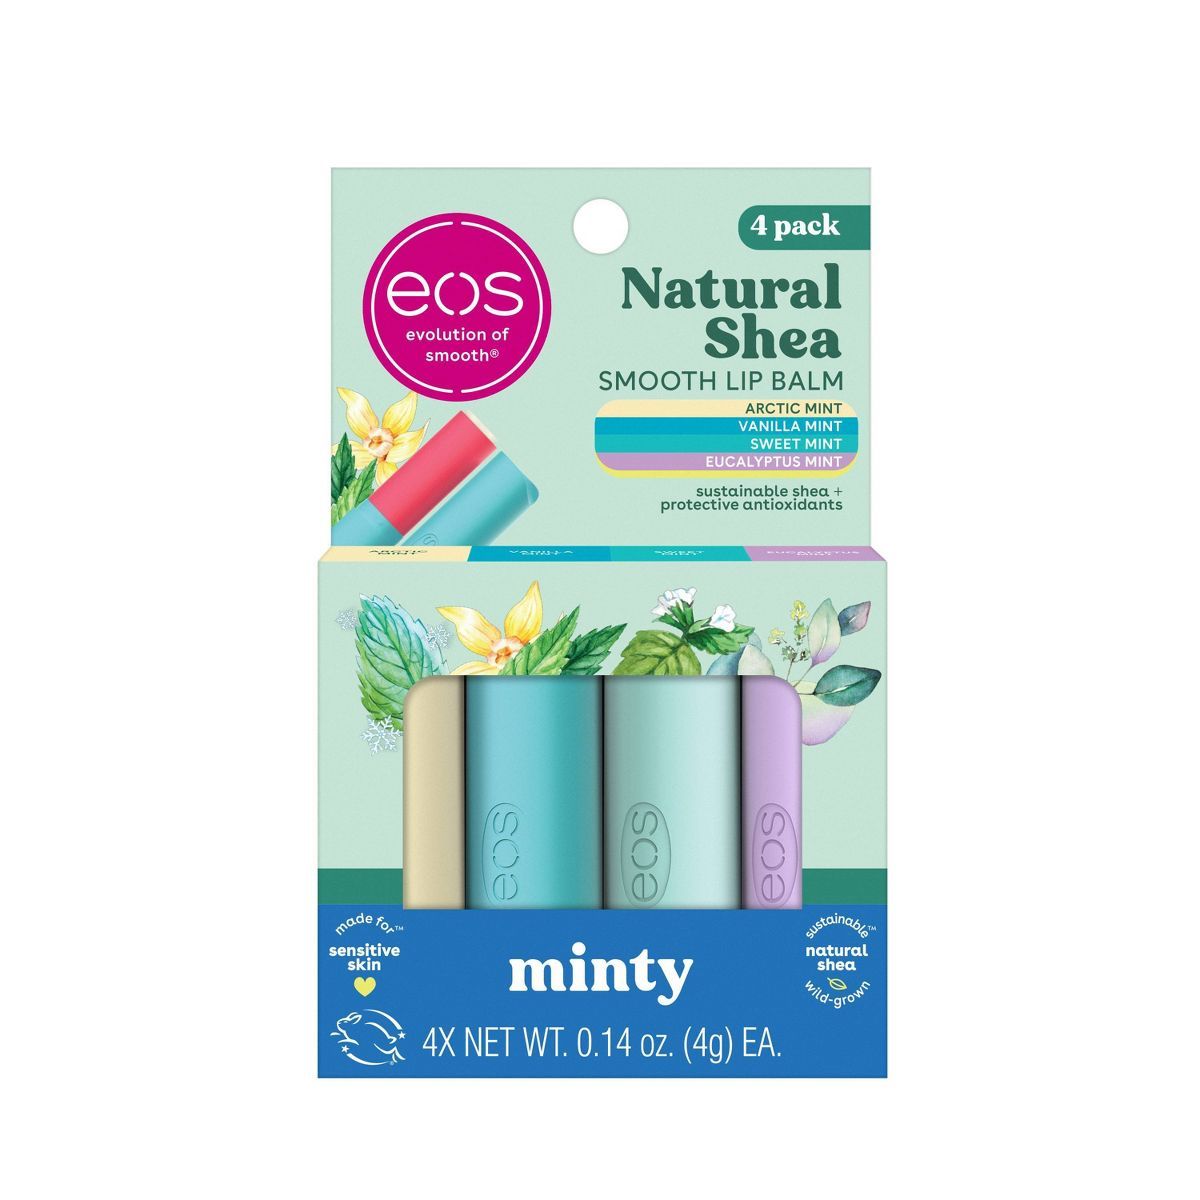 eos Natural Shea Mint Lip Balm Stick Variety Pack - 4pk | Target